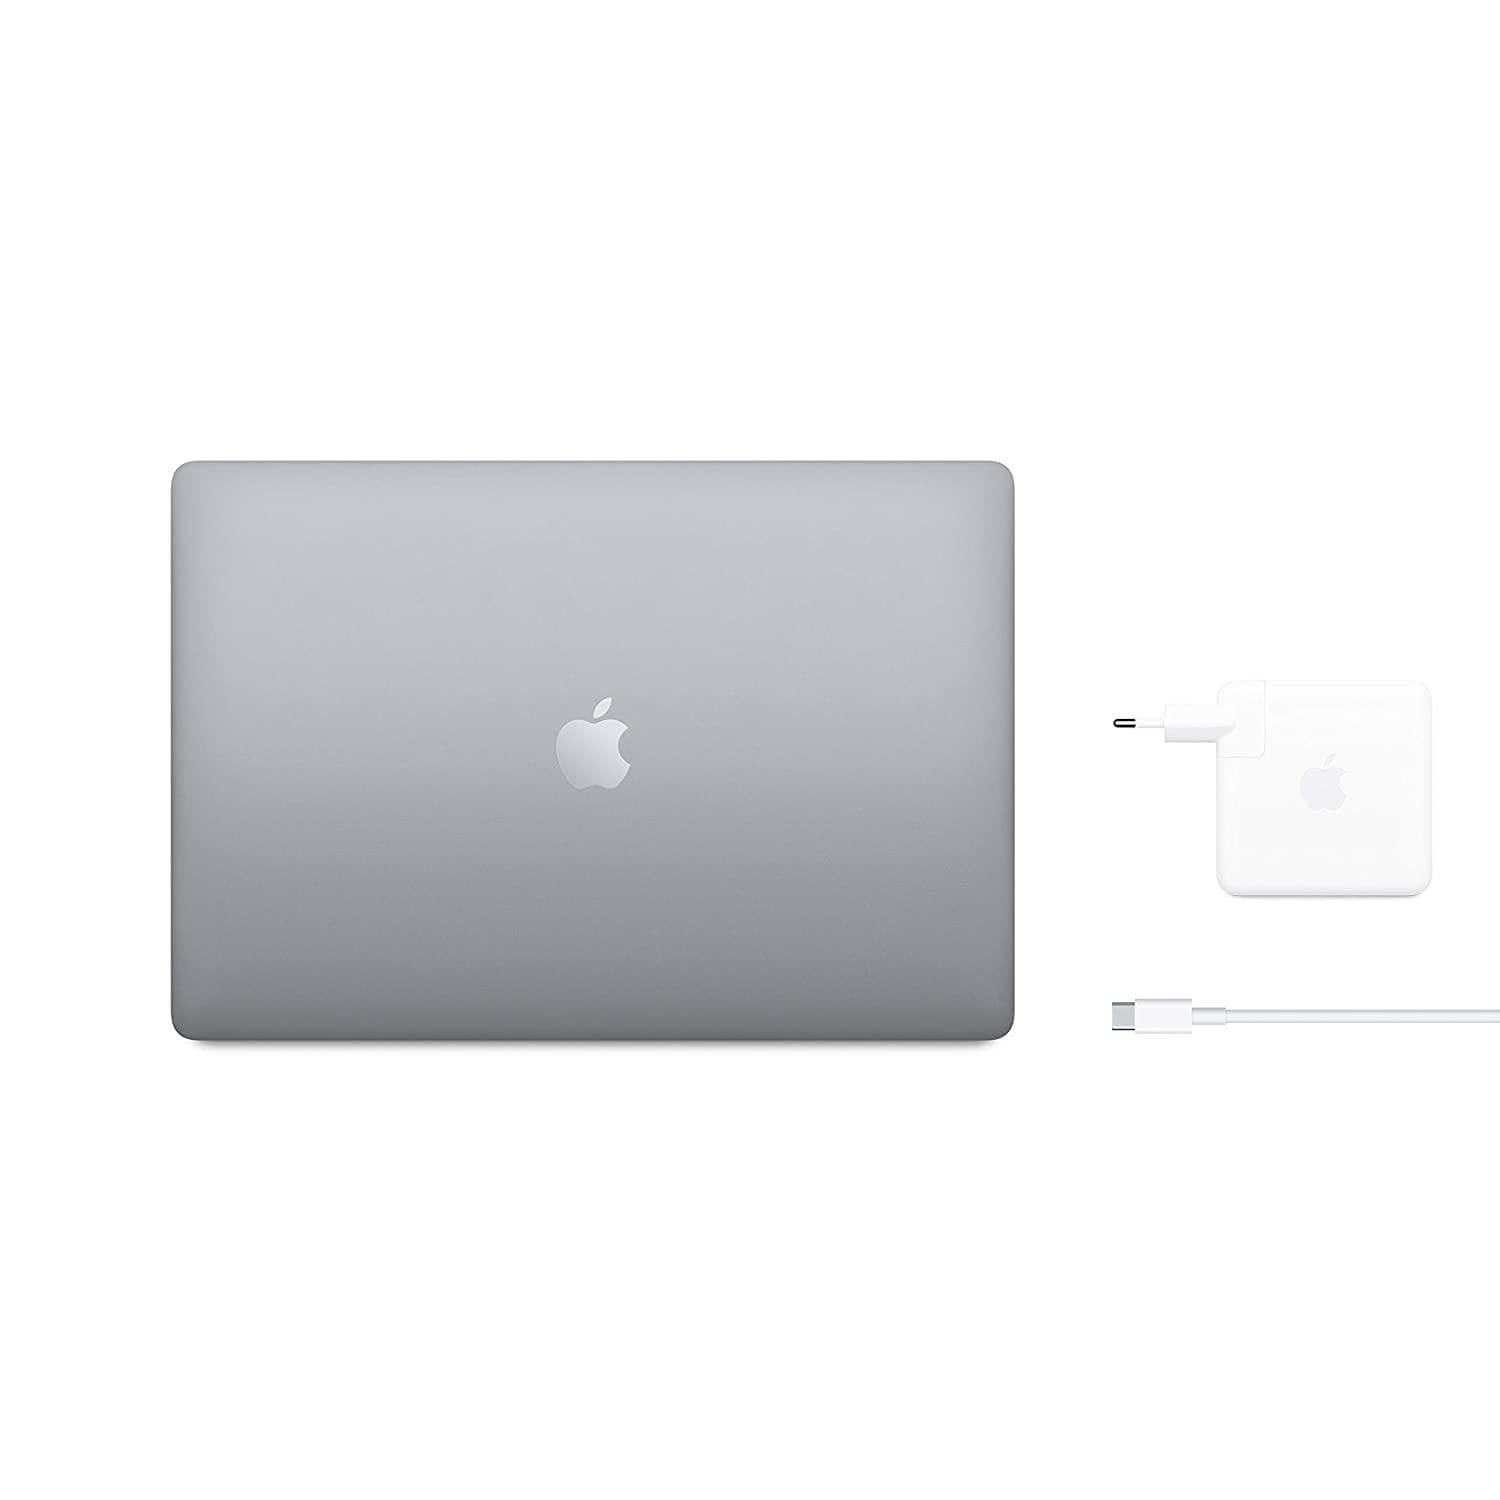 Apple MacBook Pro MVVJ2LL/A (16-inch, 16GB RAM, 512GB SSD, 2.6GHz 9th Gen Intel Core i7) - Space Grey-Tablets & Accessories-dealsplant